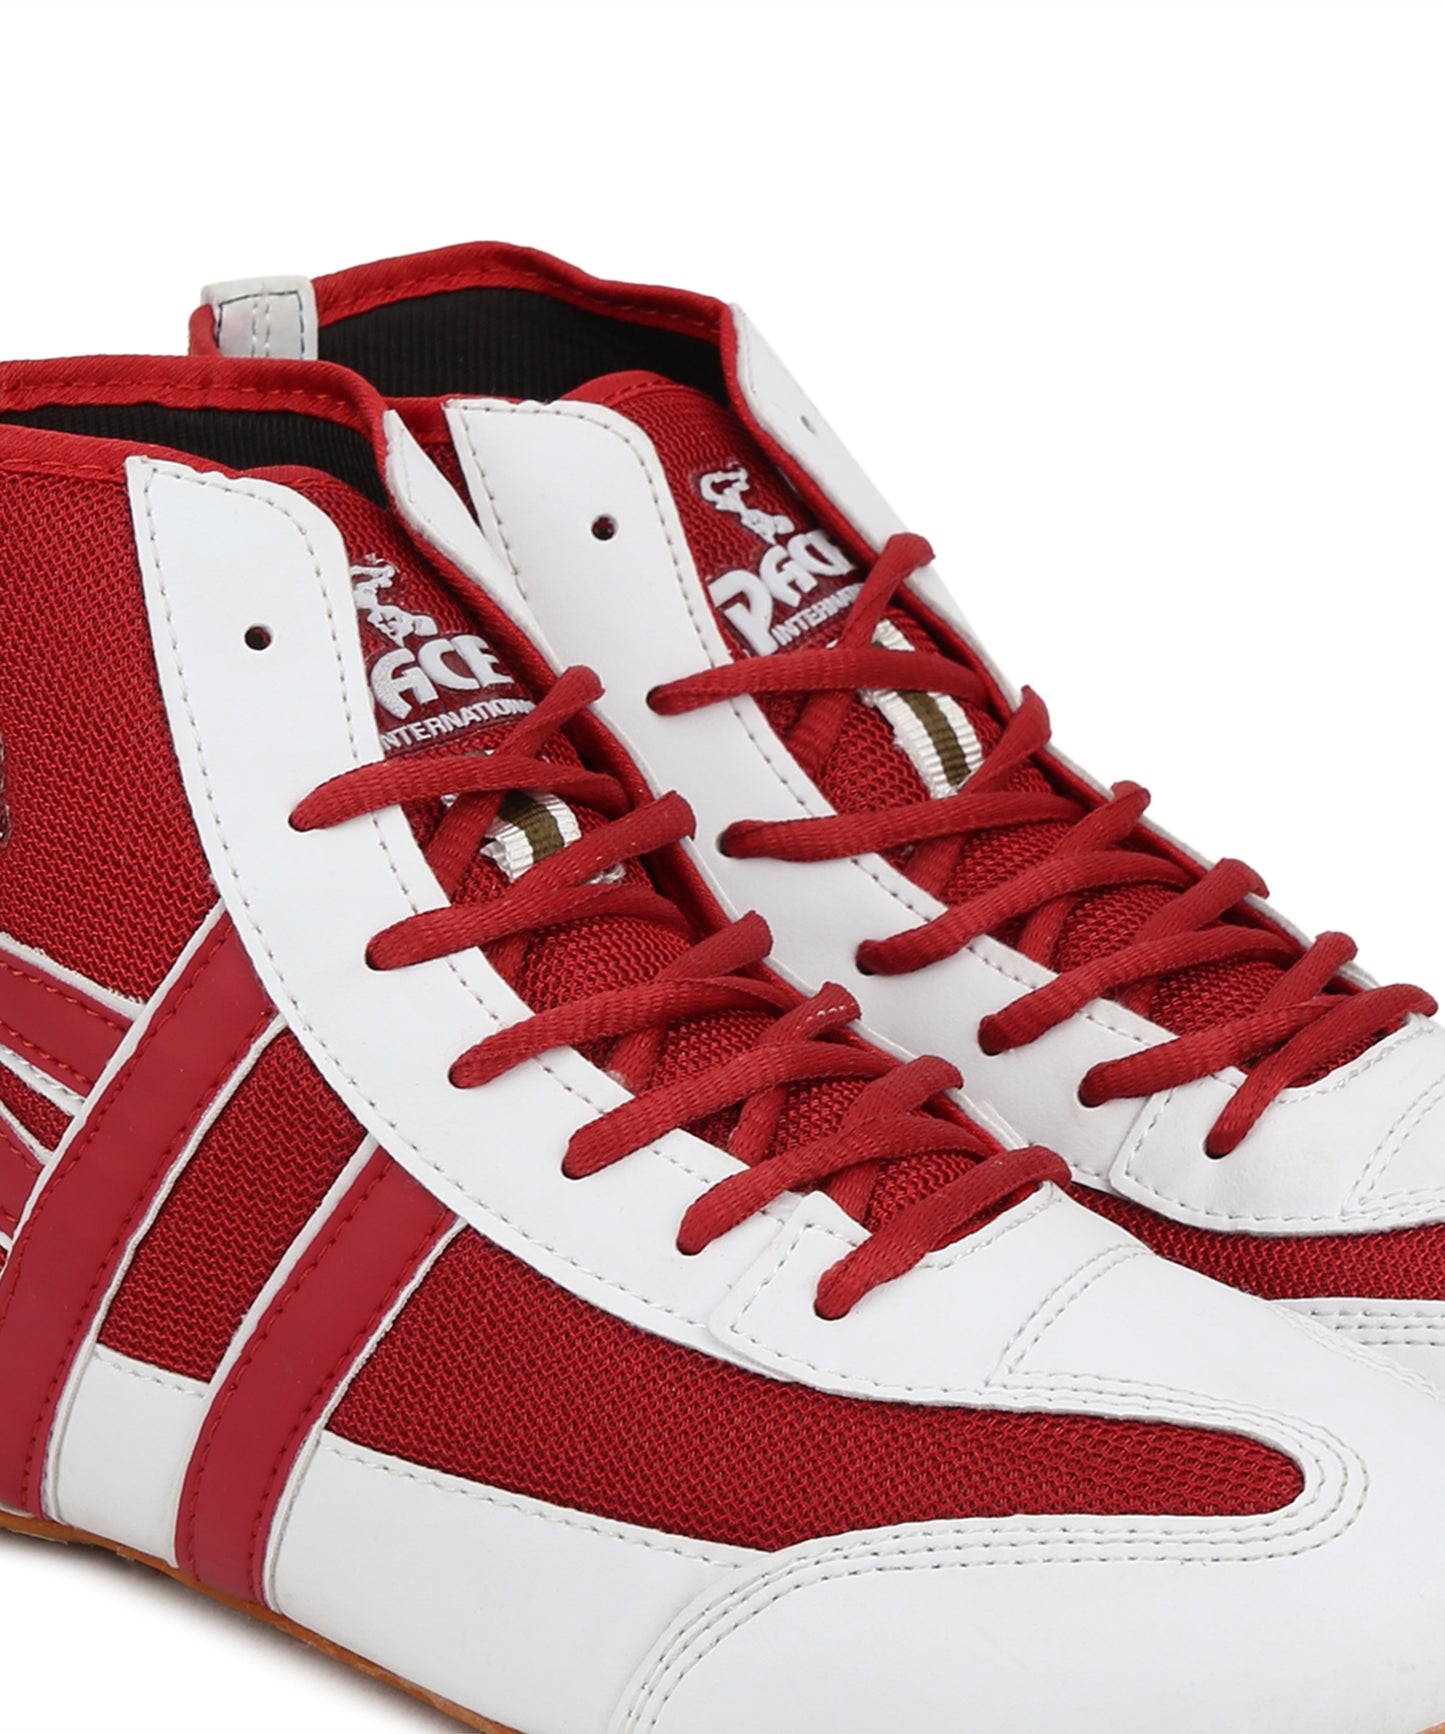 Pace International Kabaddi Shoes (Red/White)